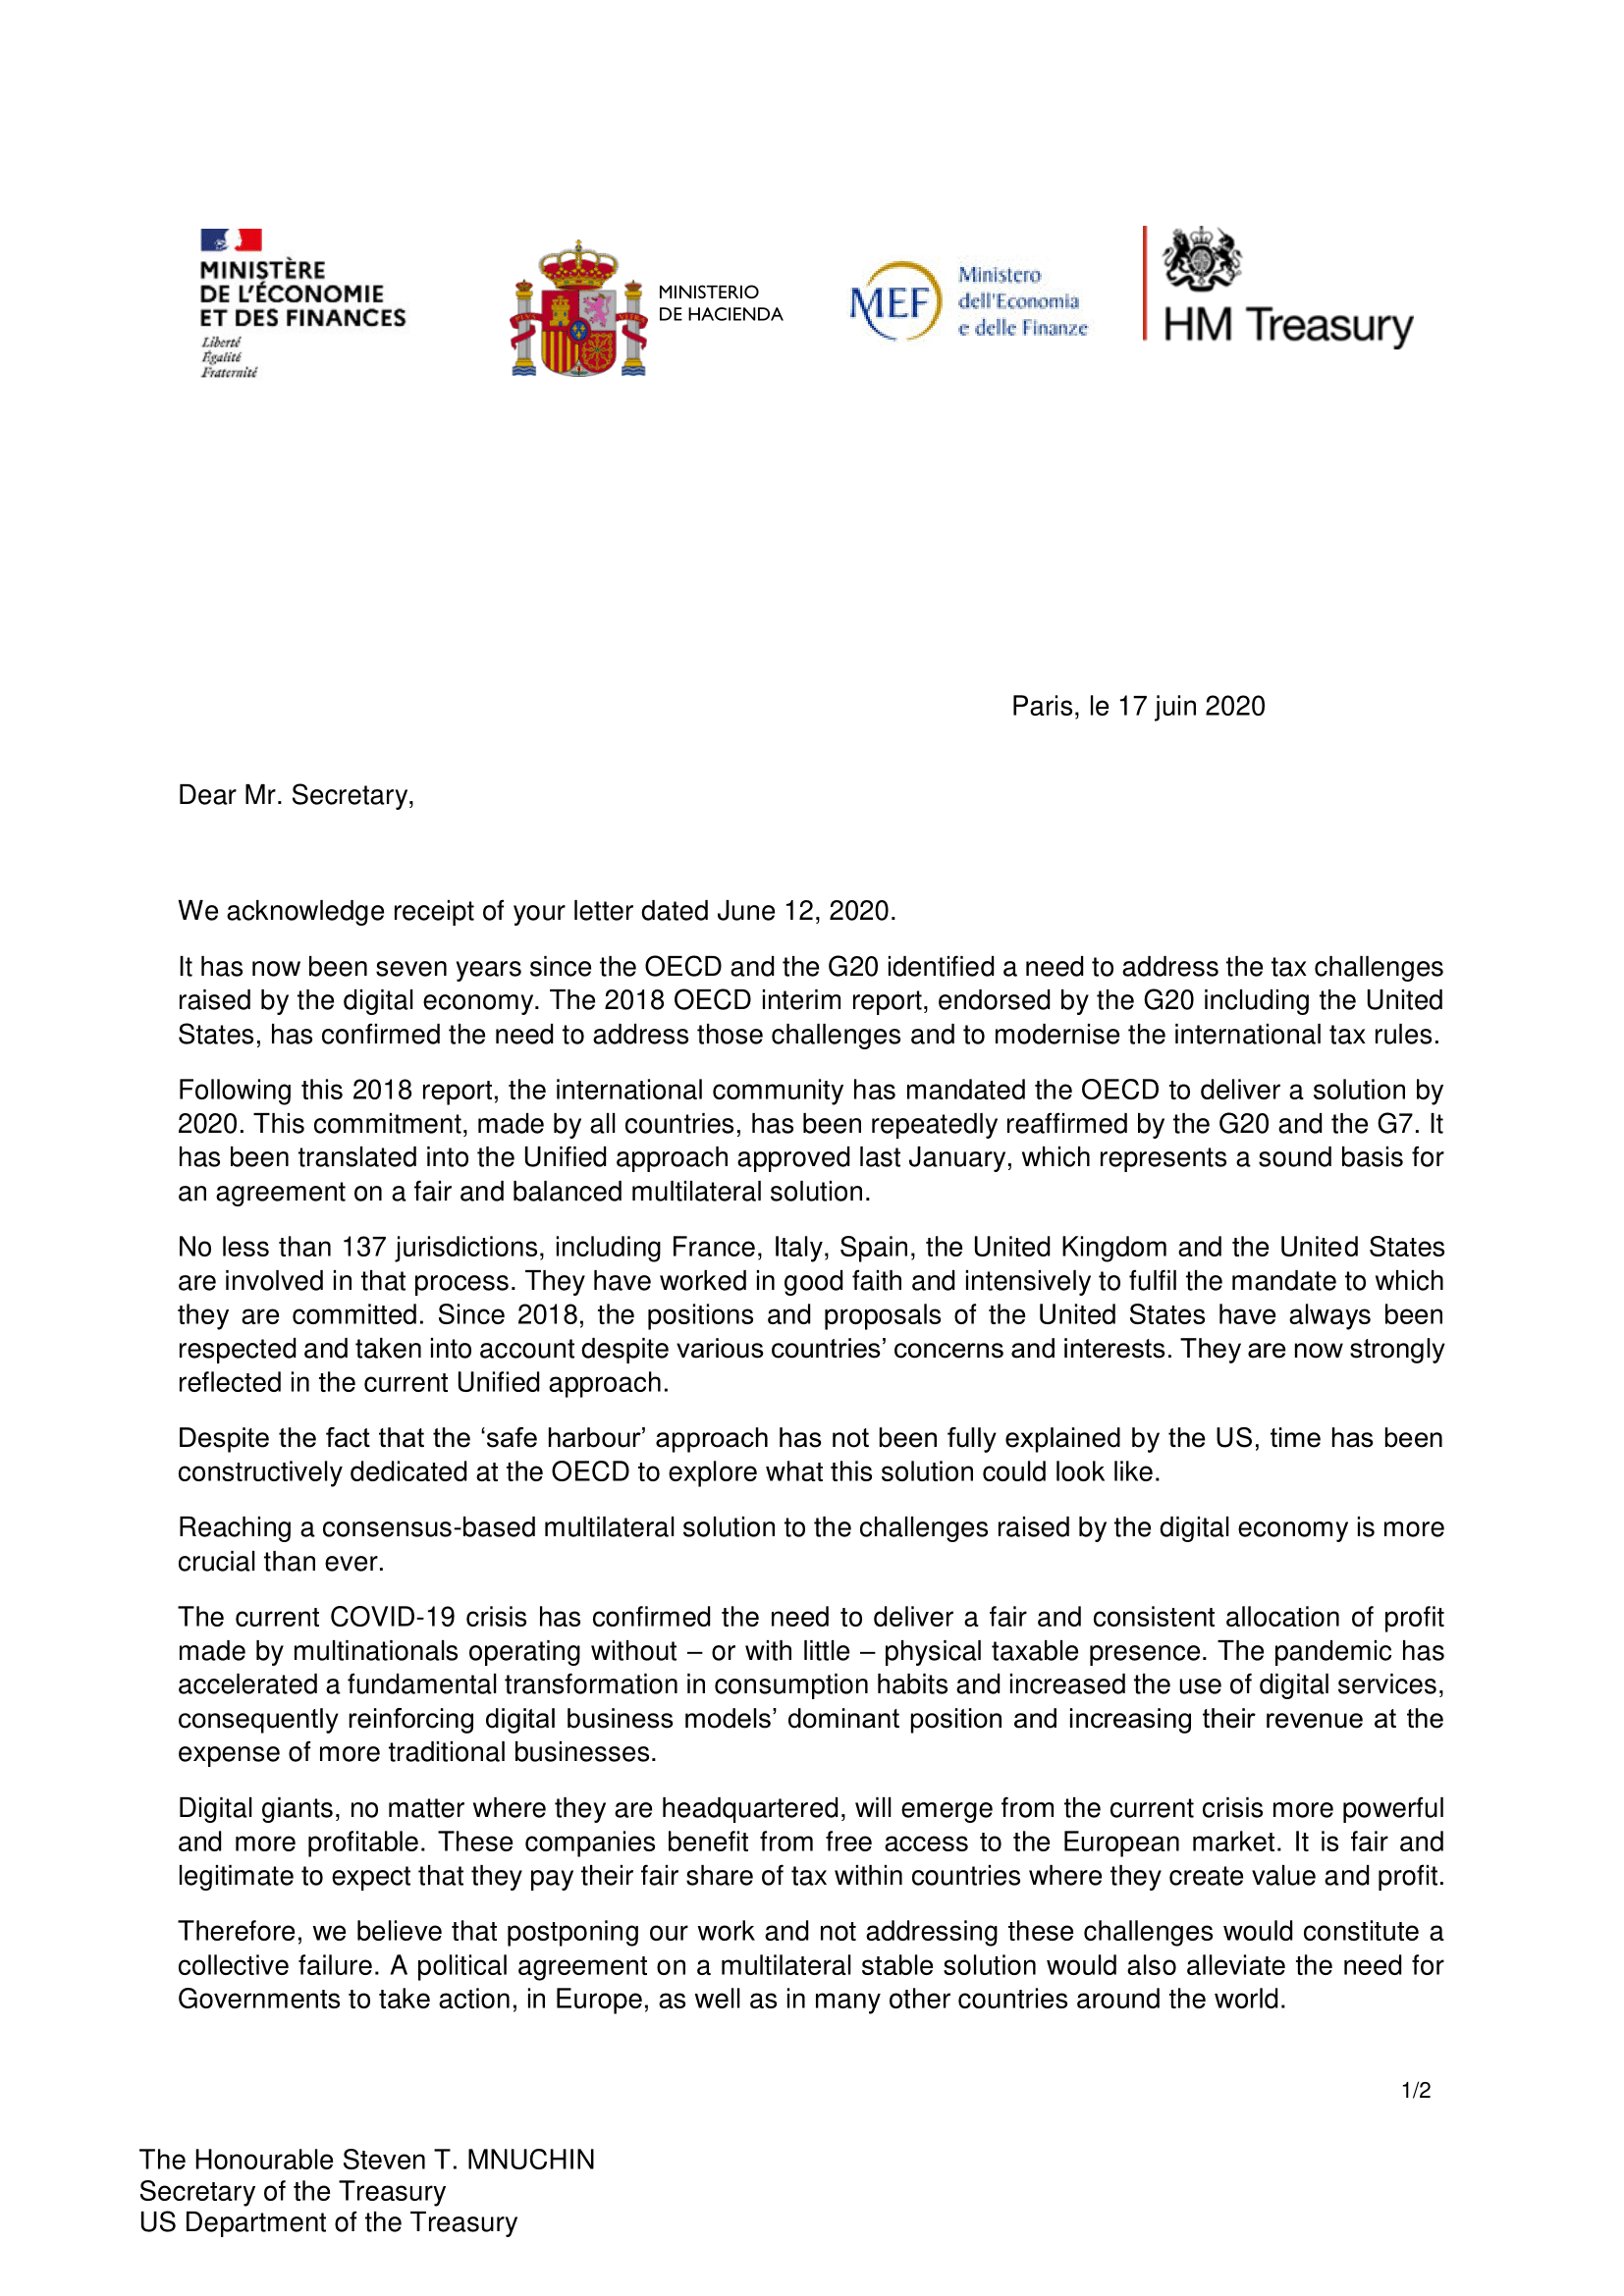 FIn Mins to Mnuchin IT-FR-UK-SP letter 17 June 2020-1.png